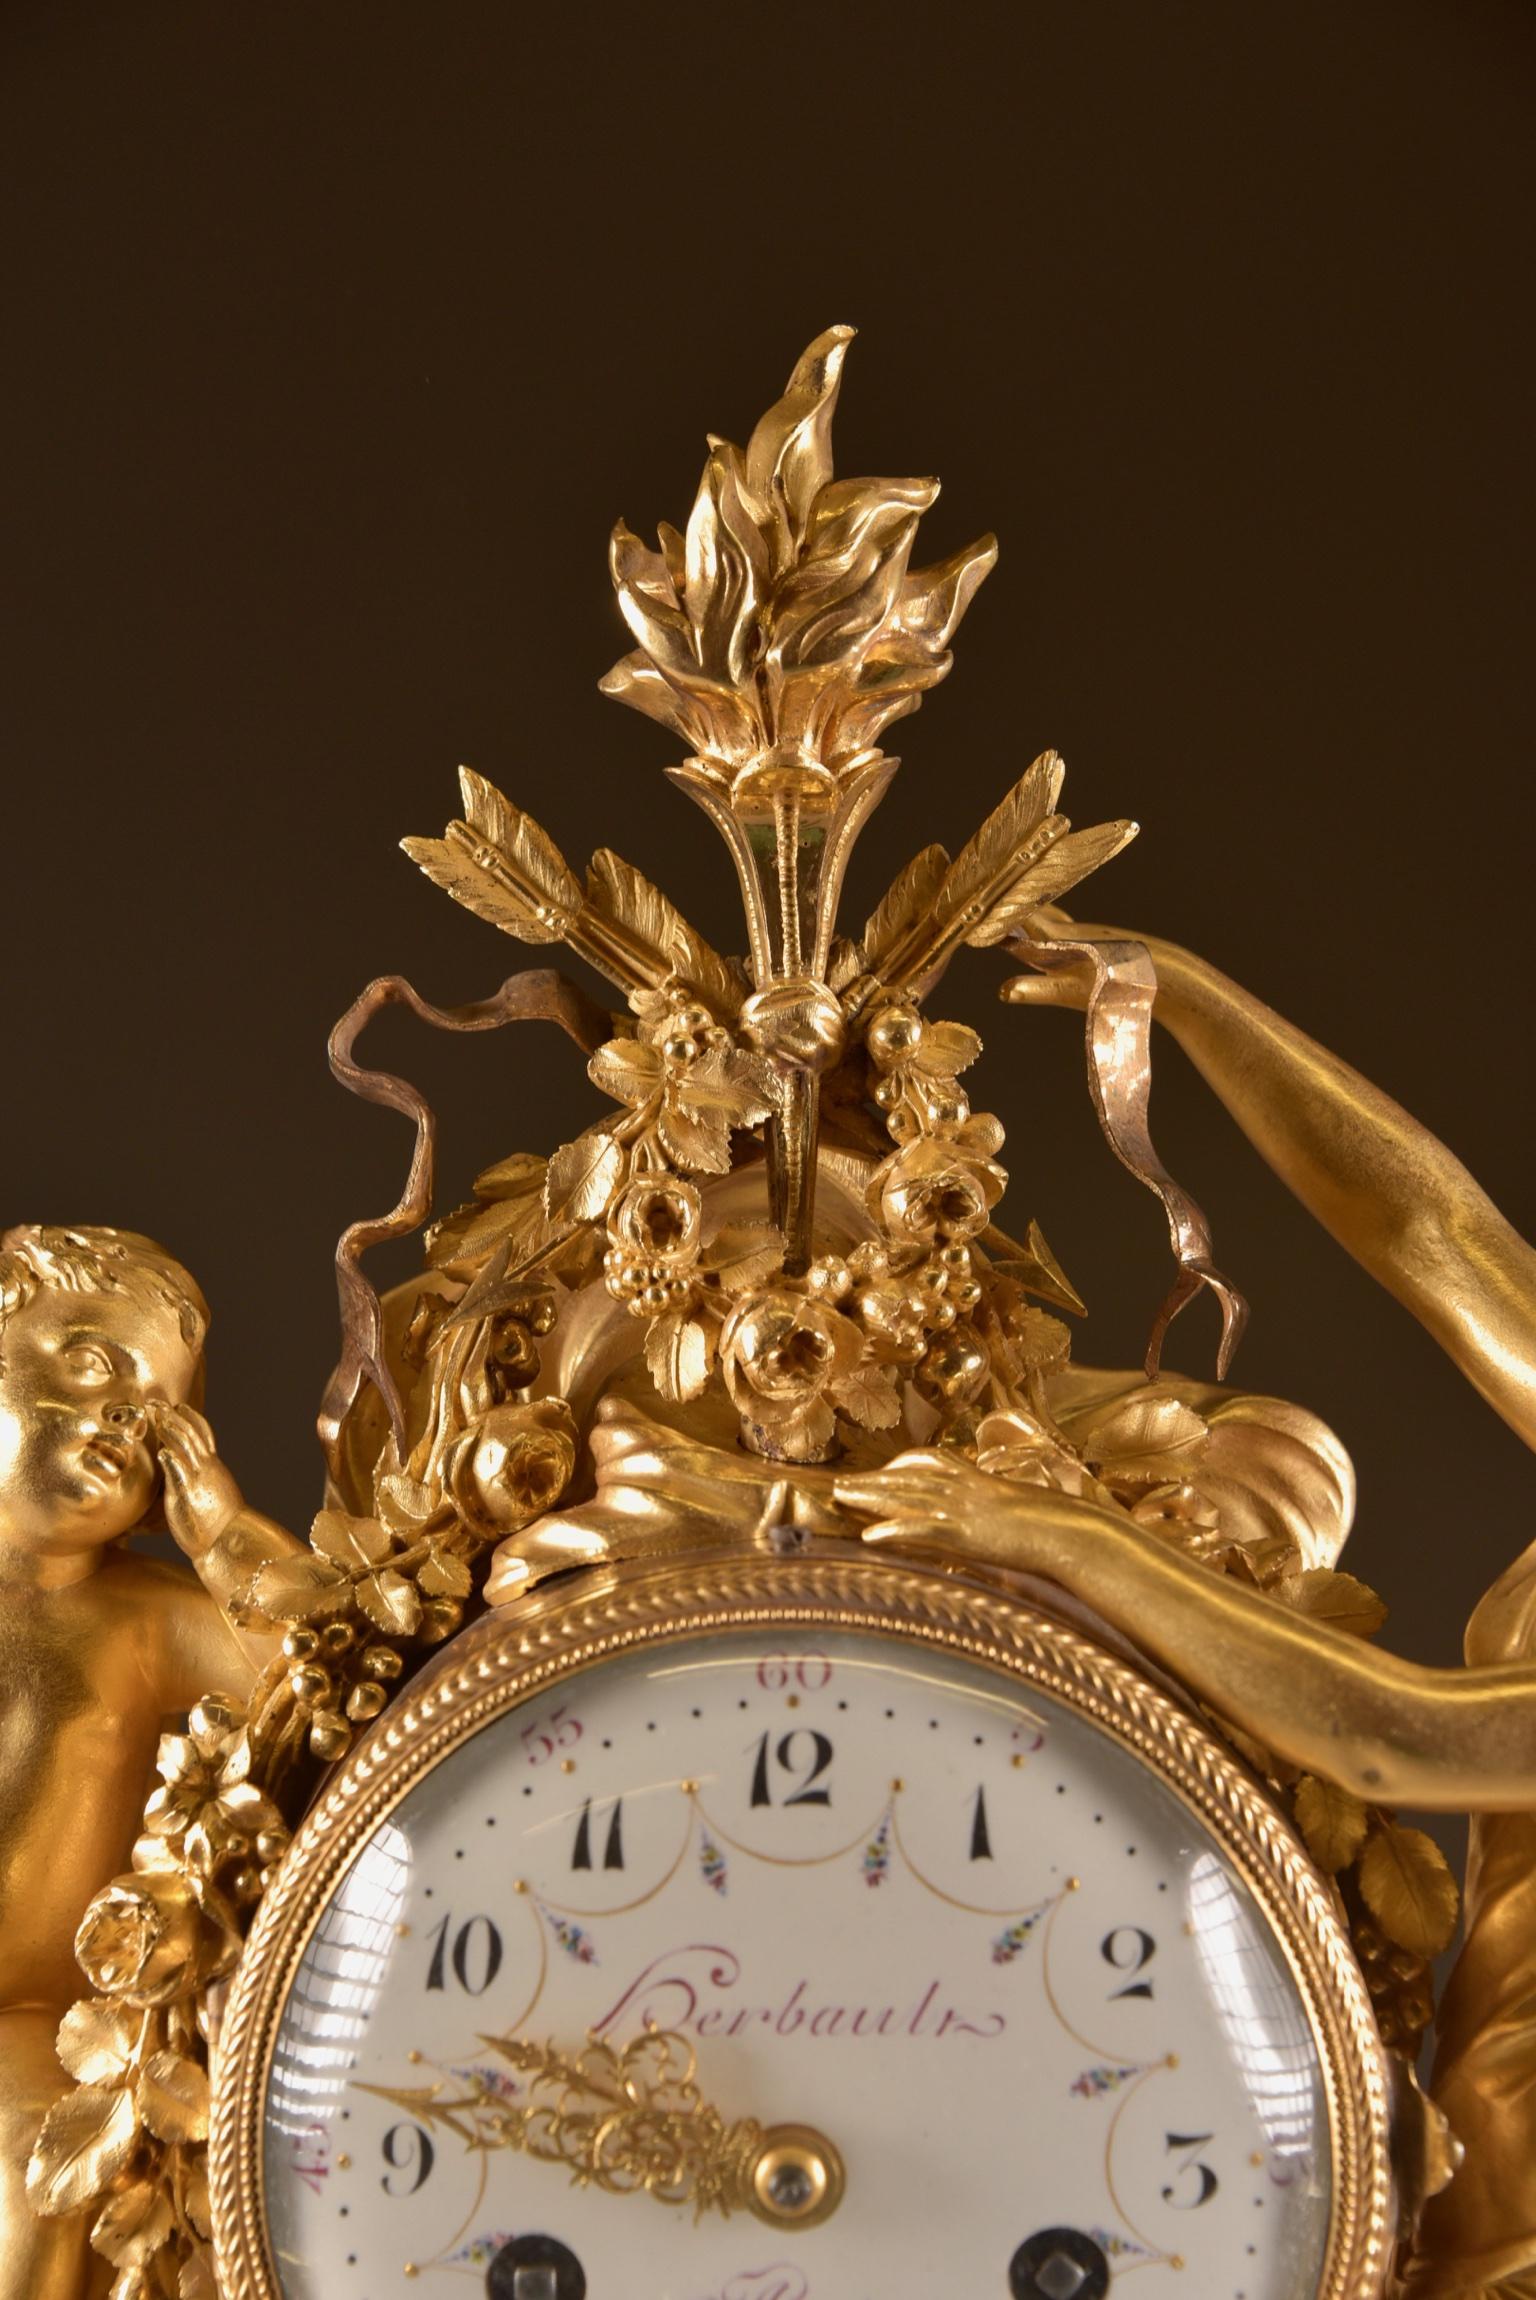 Late 18th Century Large Louis XVI clock (1780), Venus and cherub, Amor wird seiner Waffen beraubt